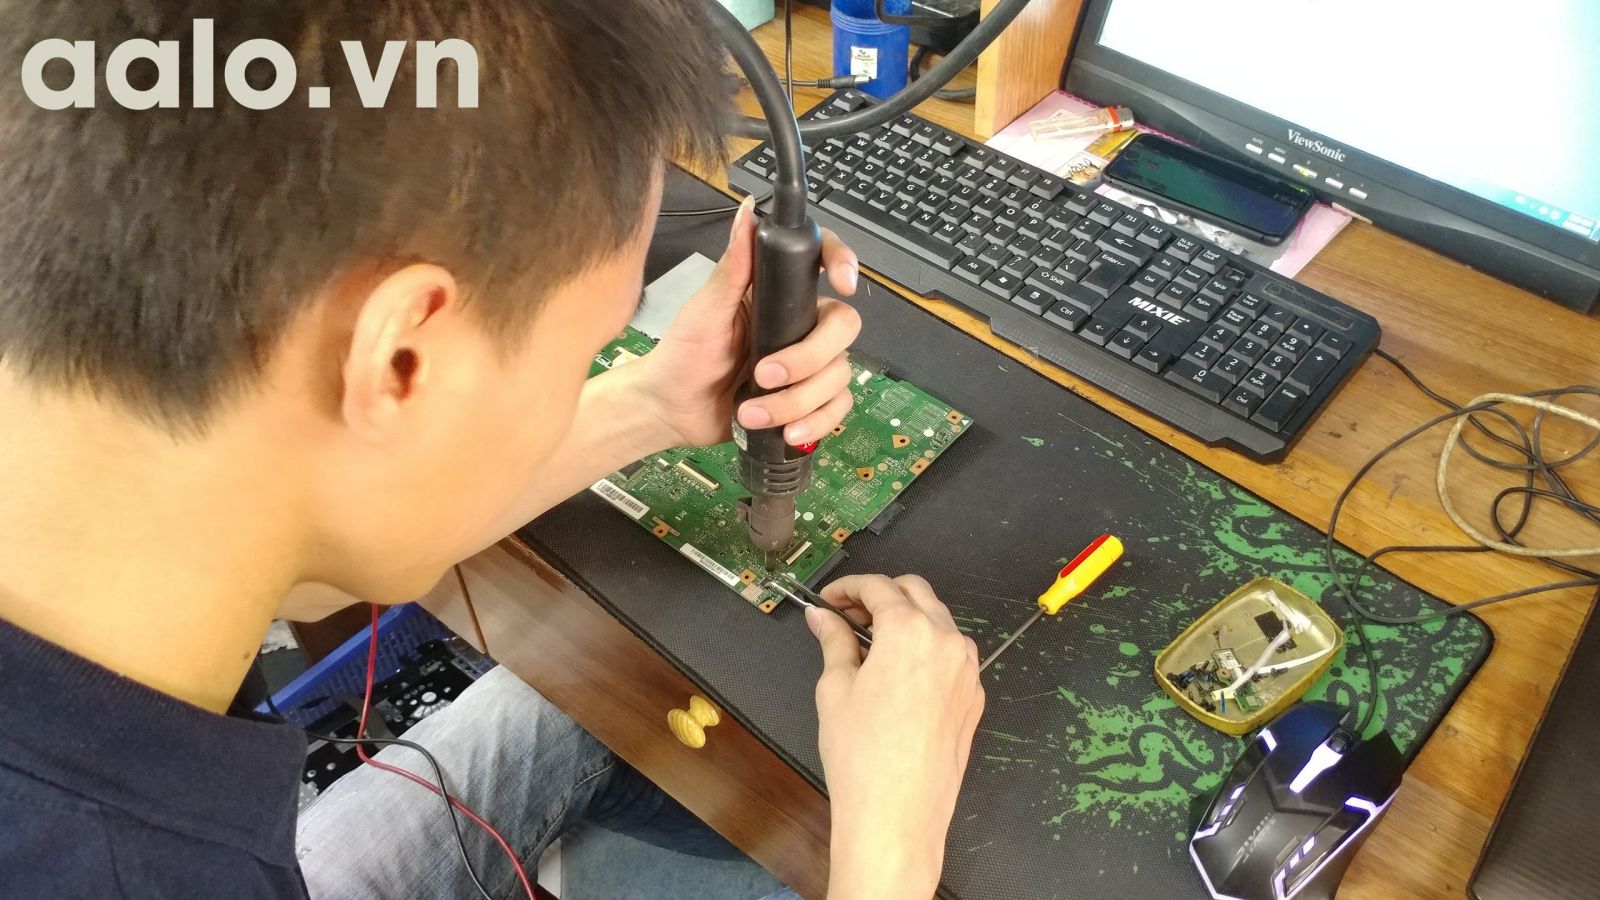 Sửa chữa Laptop Dell Vostro V13 lỗi Hệ thống hỏng-aalo.vn